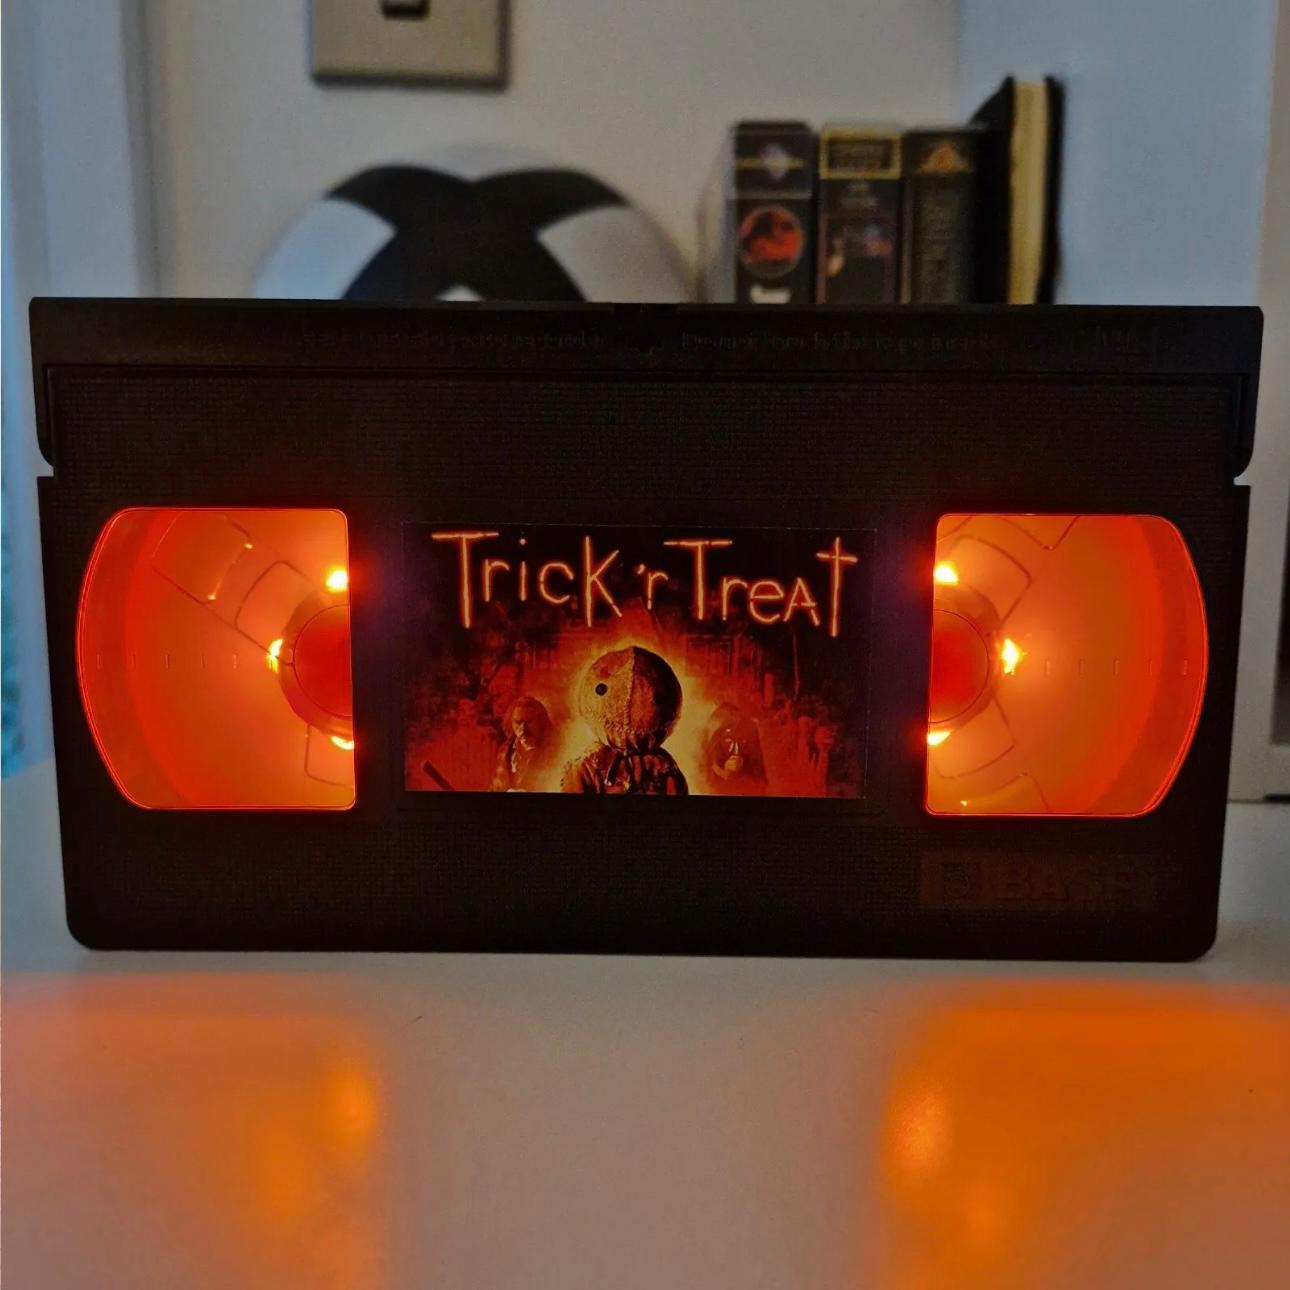 Trick ‘r’ Treat (2007) VHS LED Lamp